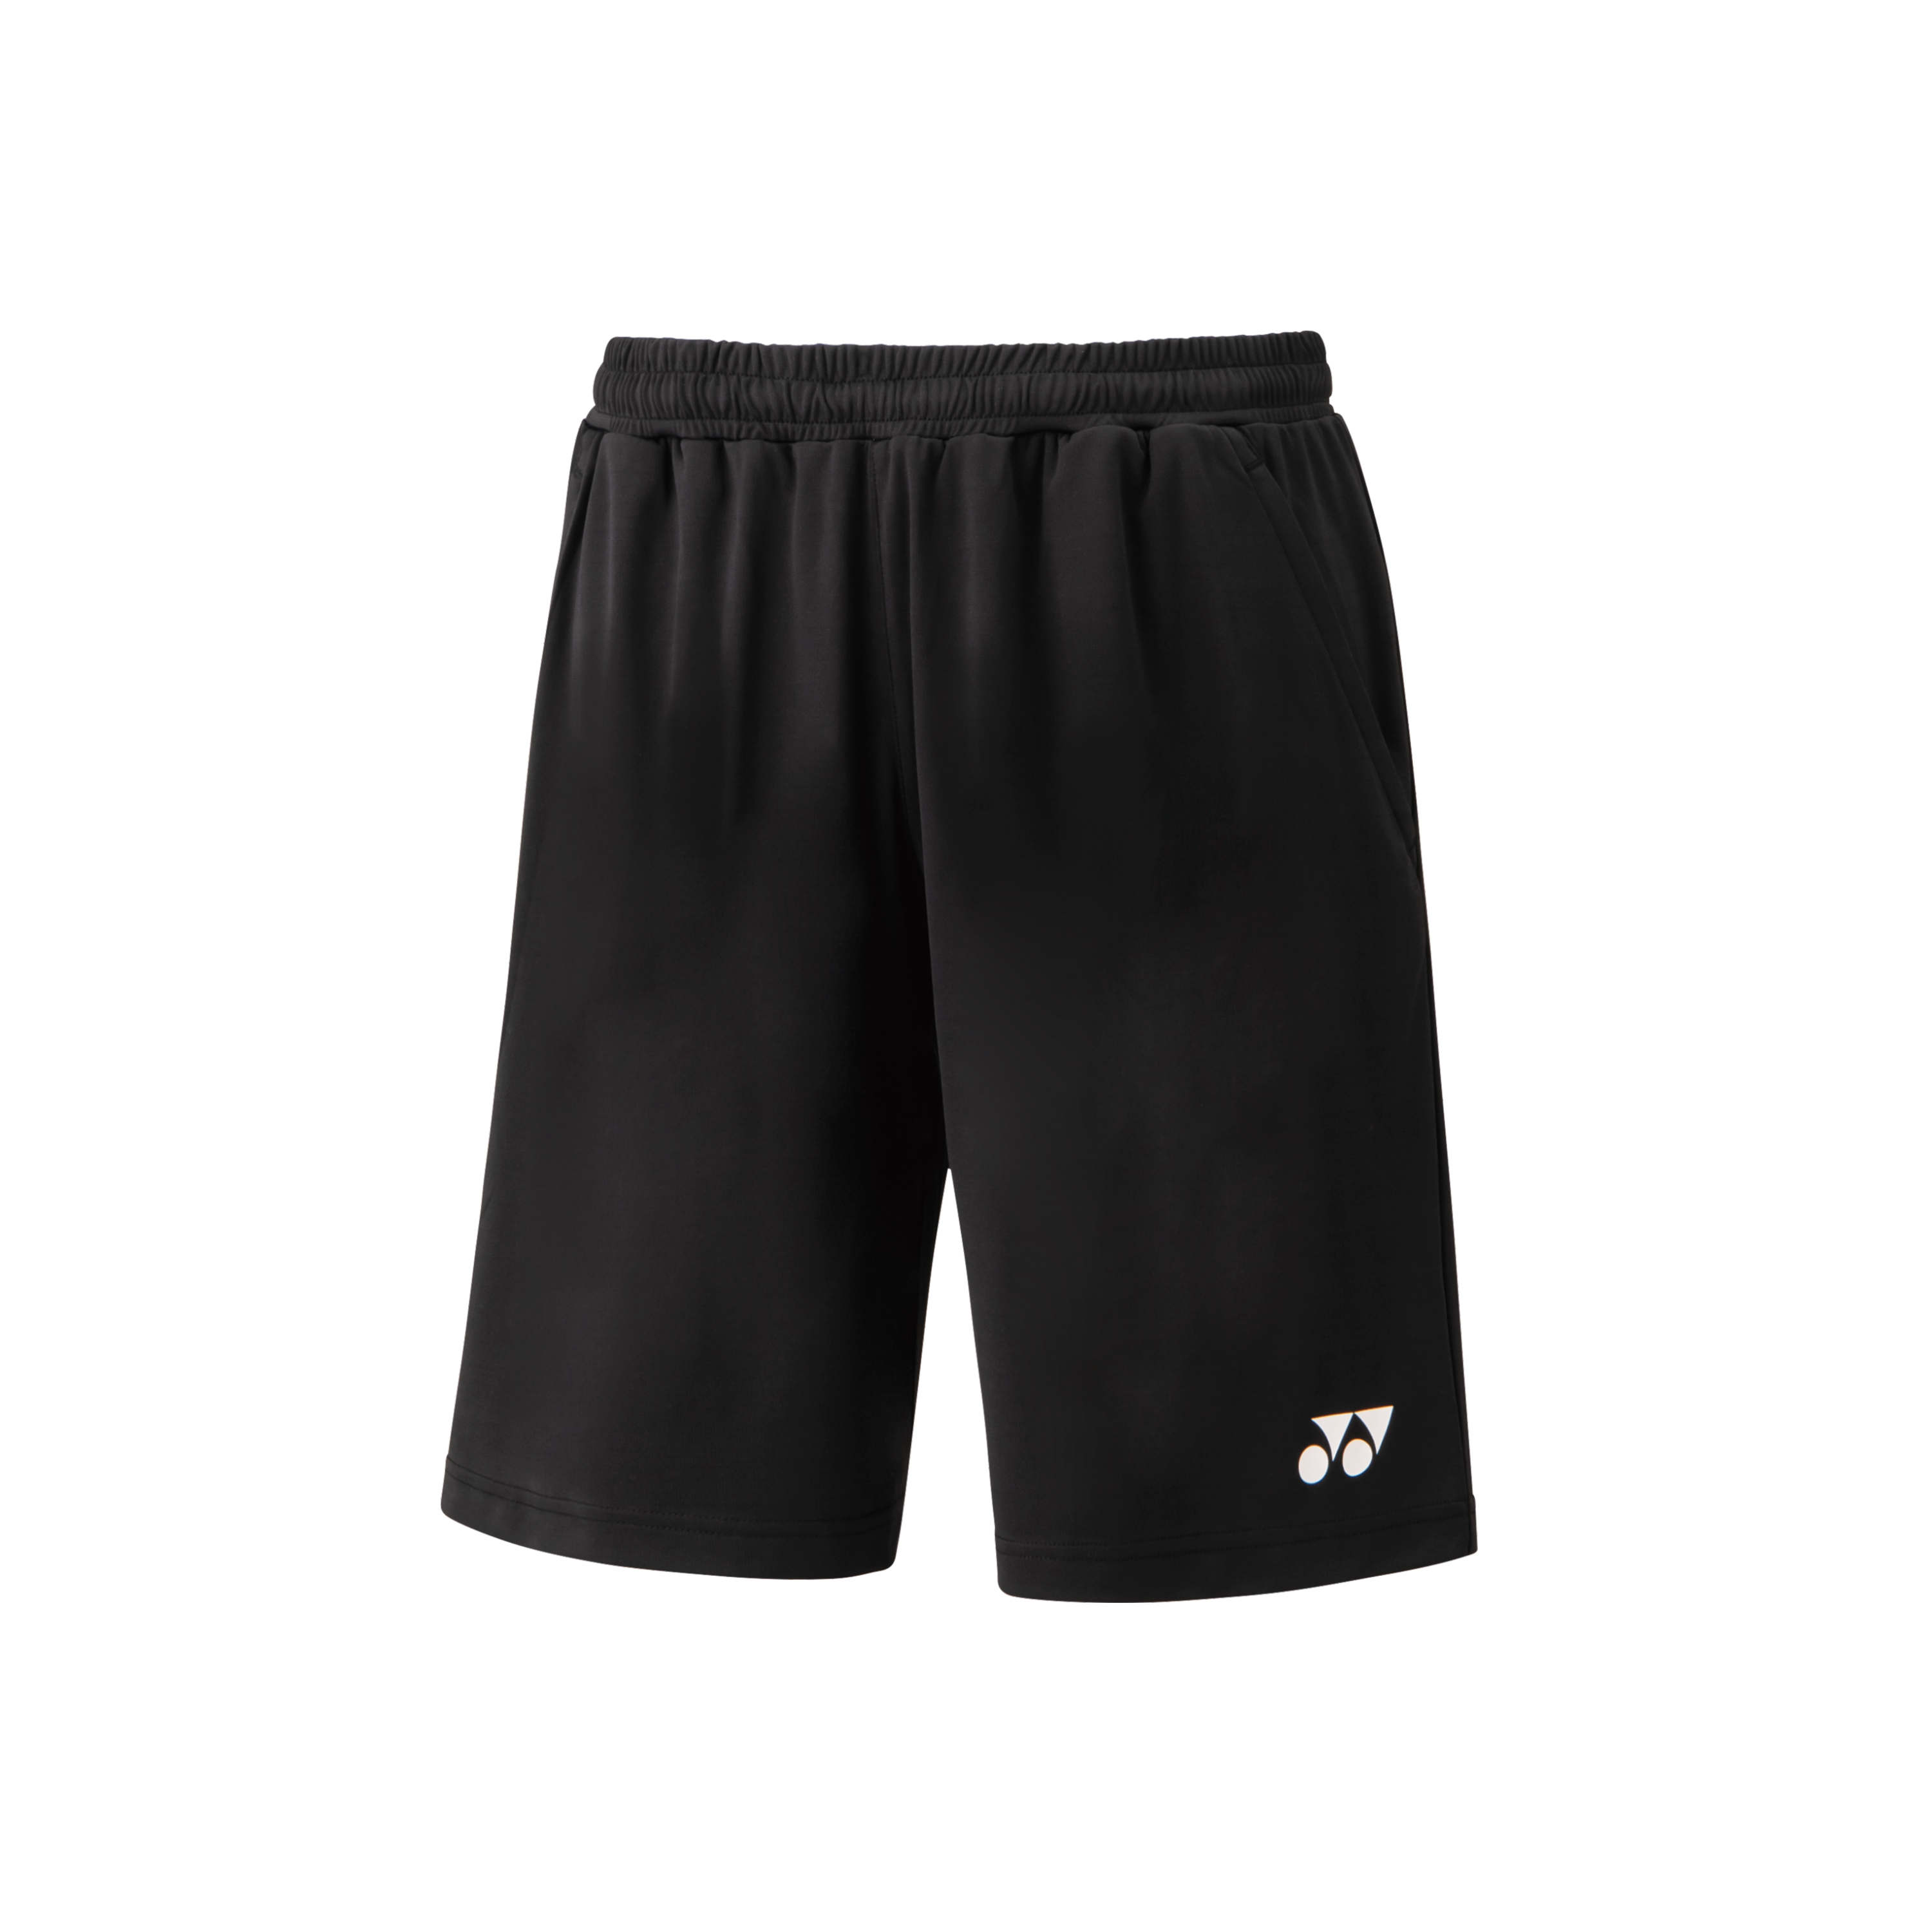 Yonex Sports Shorts YM0030 Black MEN'S